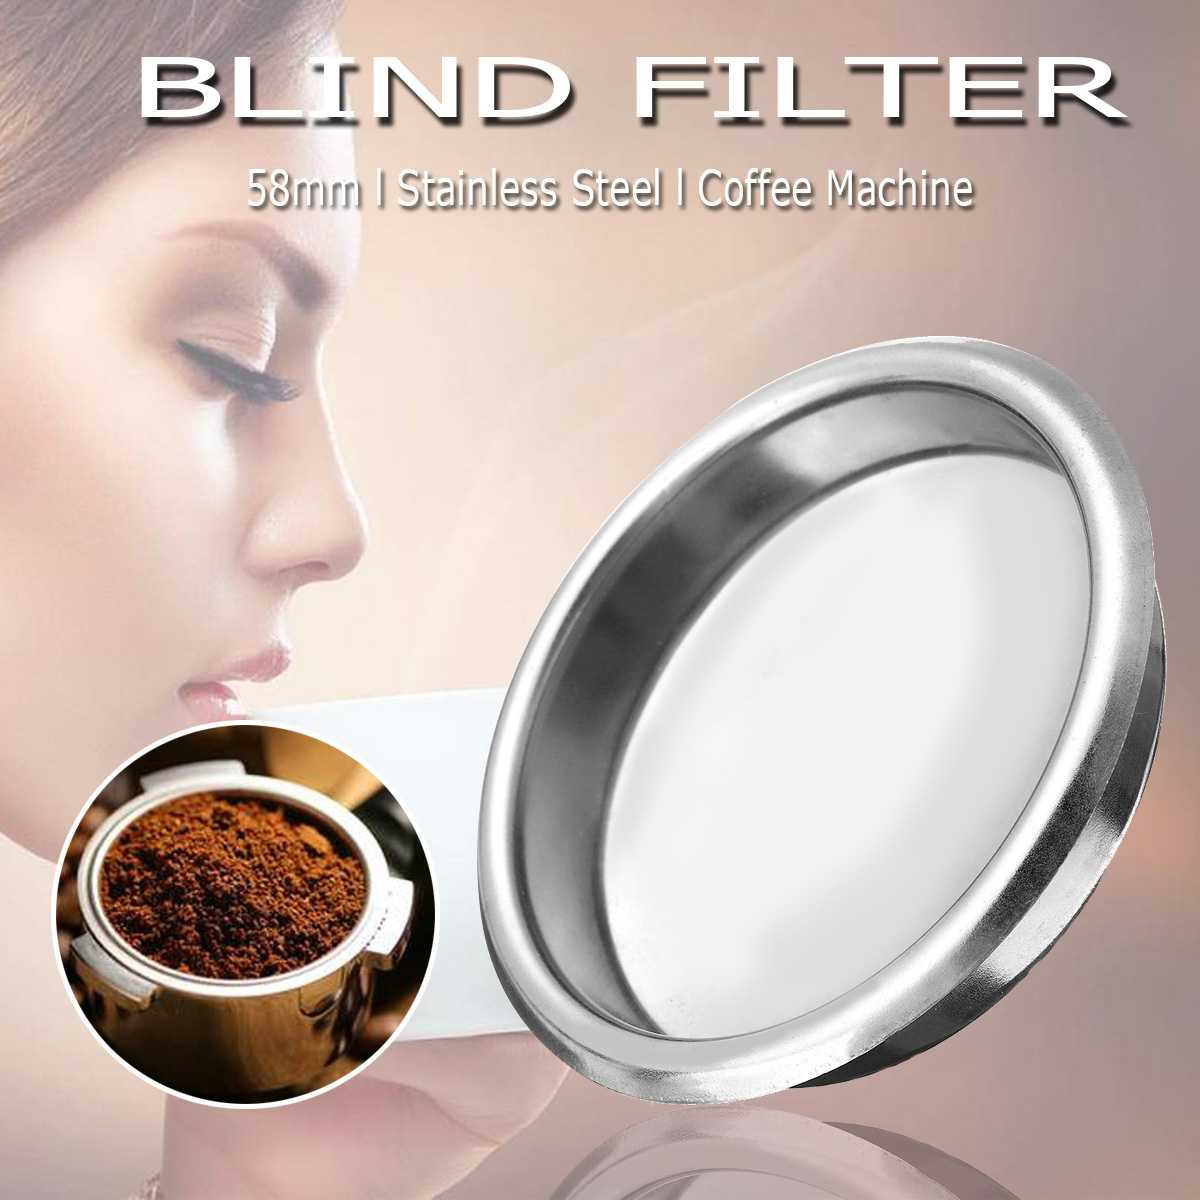 58mm Stainless Steel Blind Filter Espresso Coffee Machine Maker Backflush Flush Basket 11